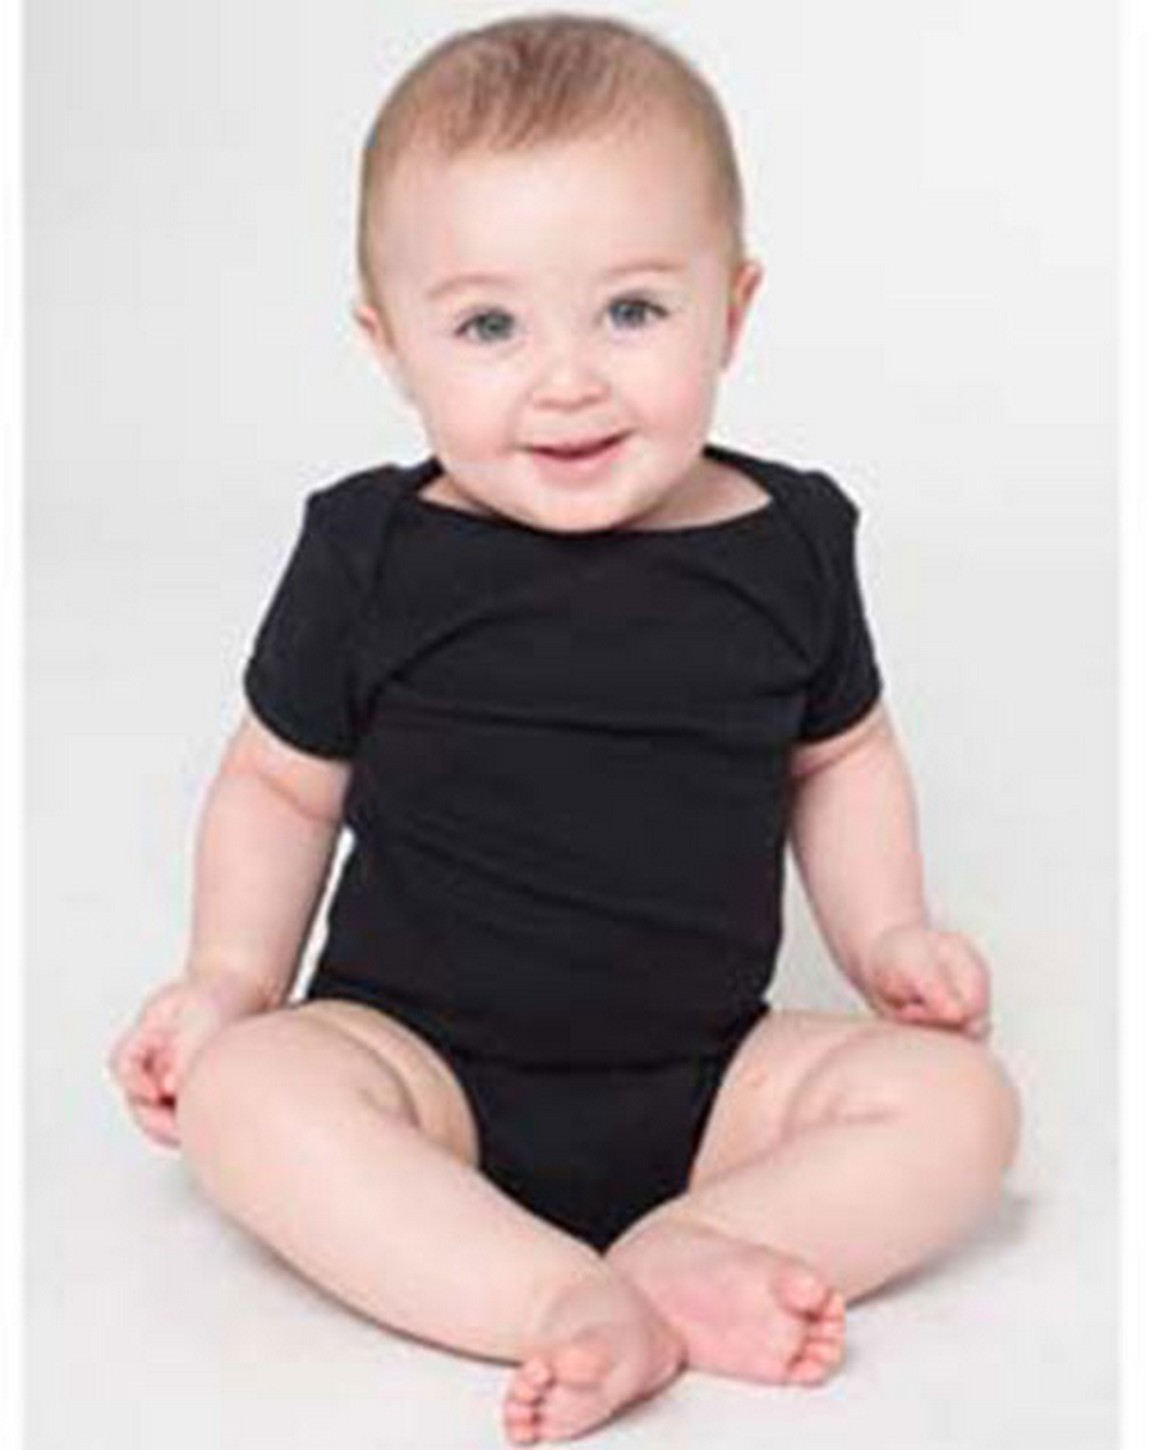 American Apparel 4001W Infant Baby Rib Short-Sleeve One-Piece